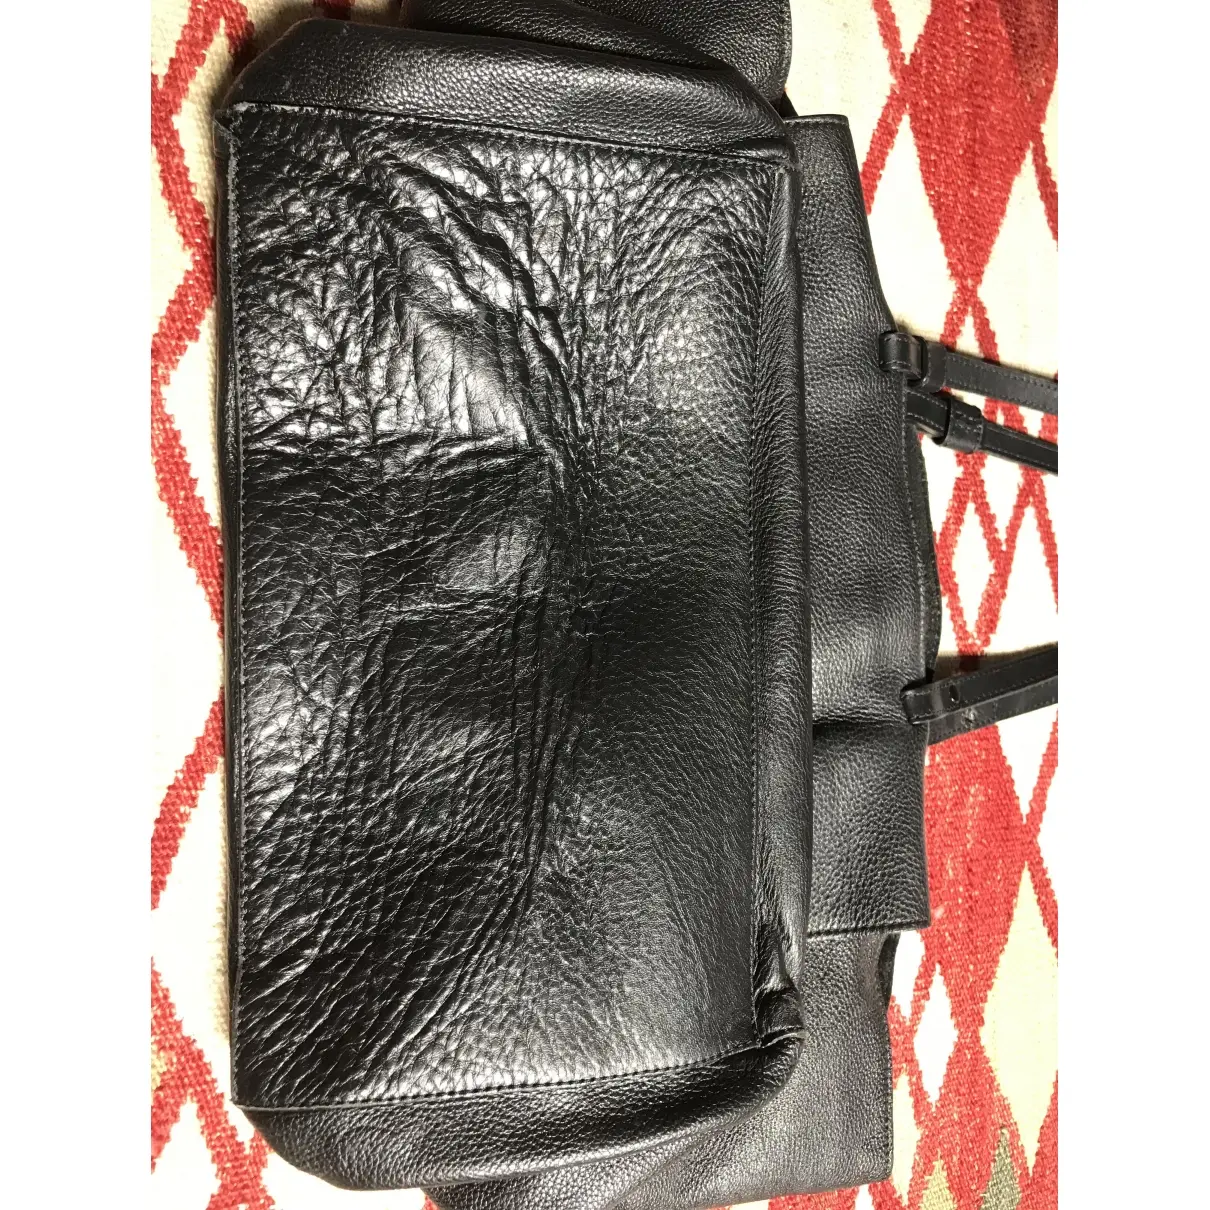 Massimo Dutti Leather tote for sale